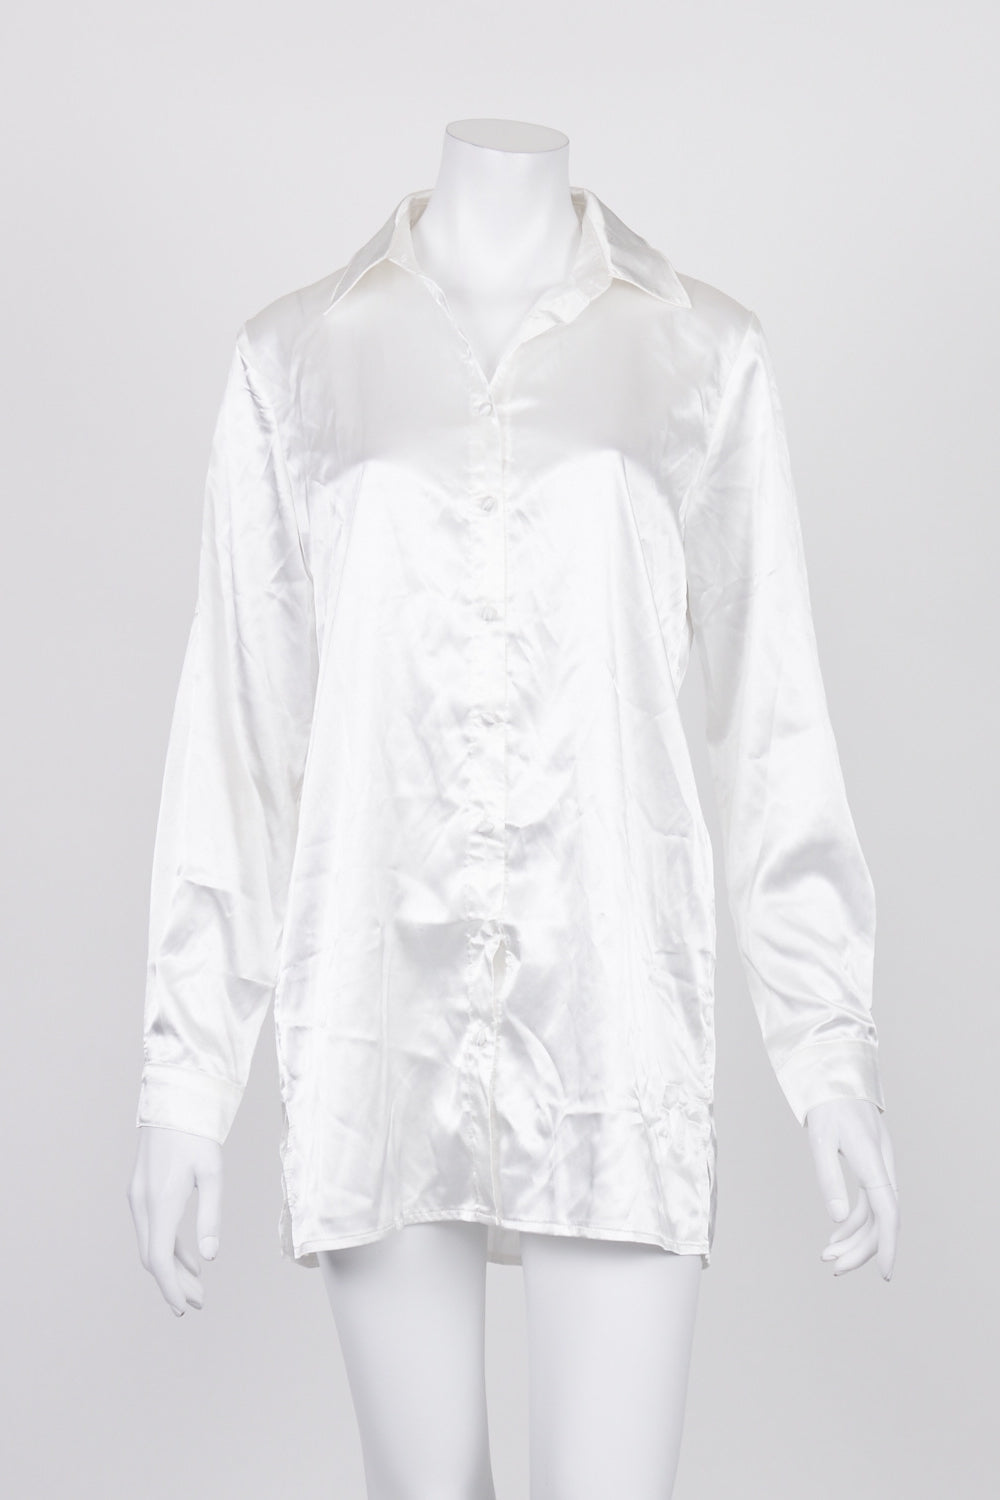 Princess Polly White Satin Shirt Dress 8